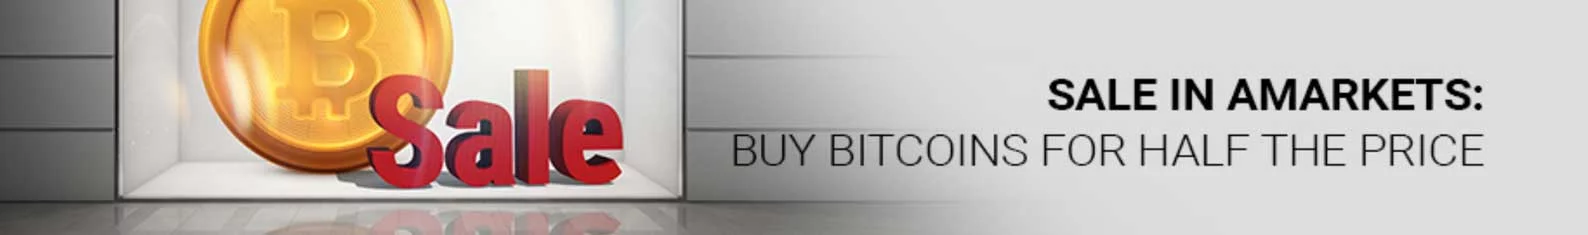 amarkets bitcoin promotion